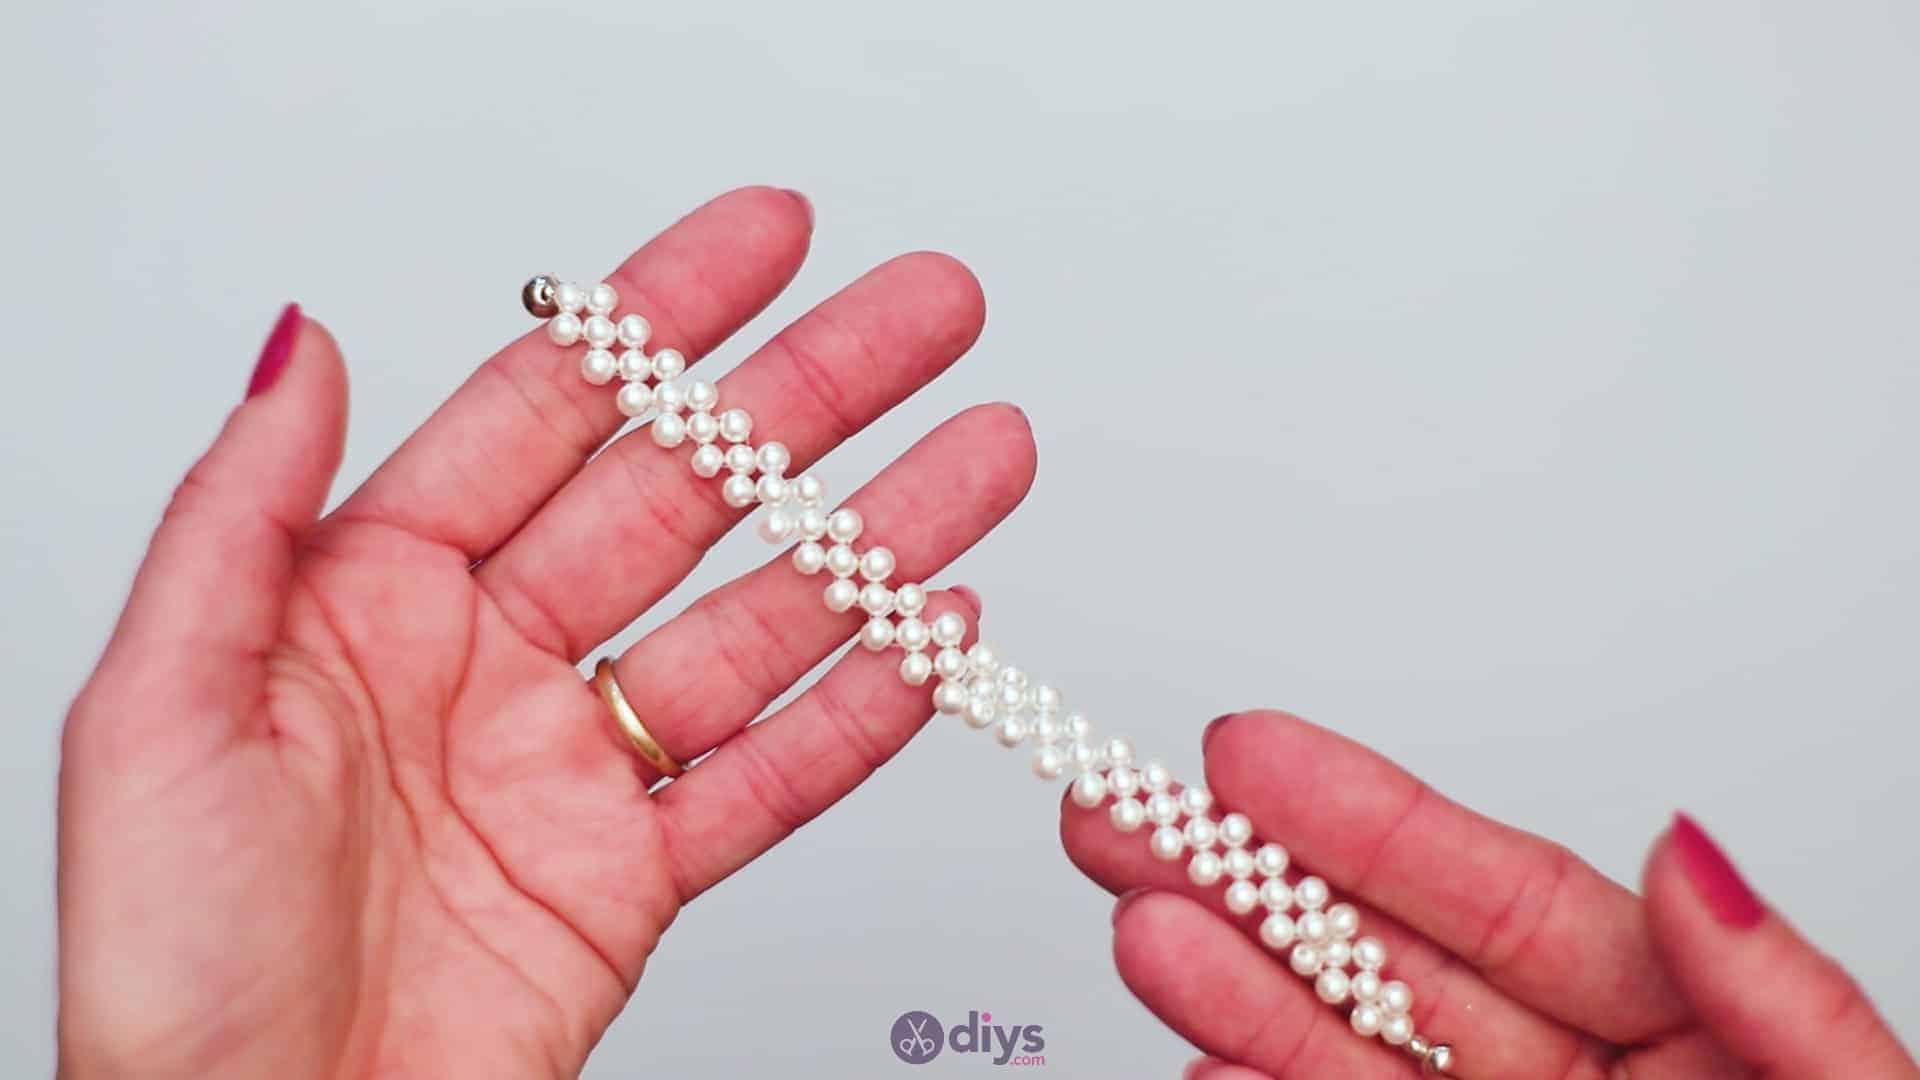 Diy elegant white beads bracelet step 6c